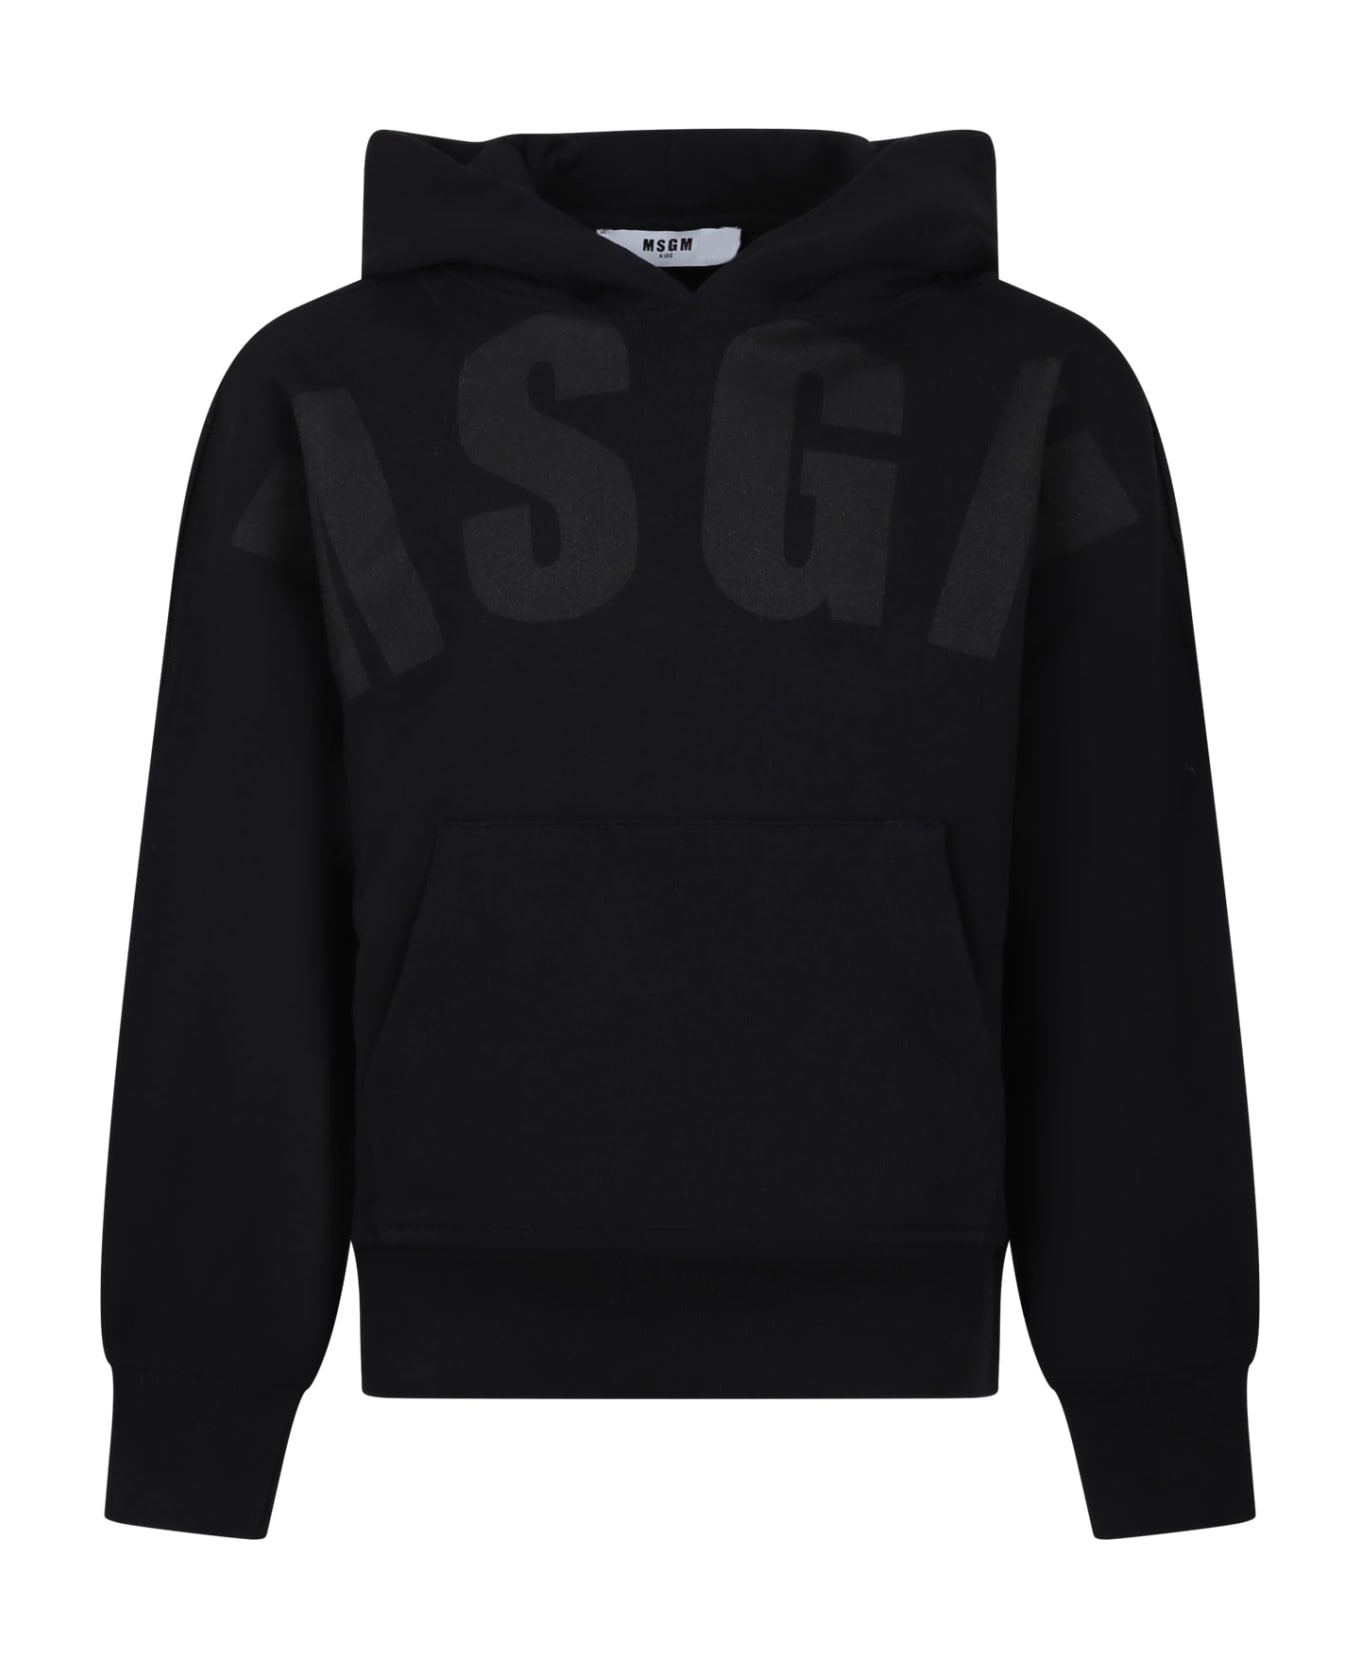 MSGM Black Sweatshirt For Kids With Logo - Black